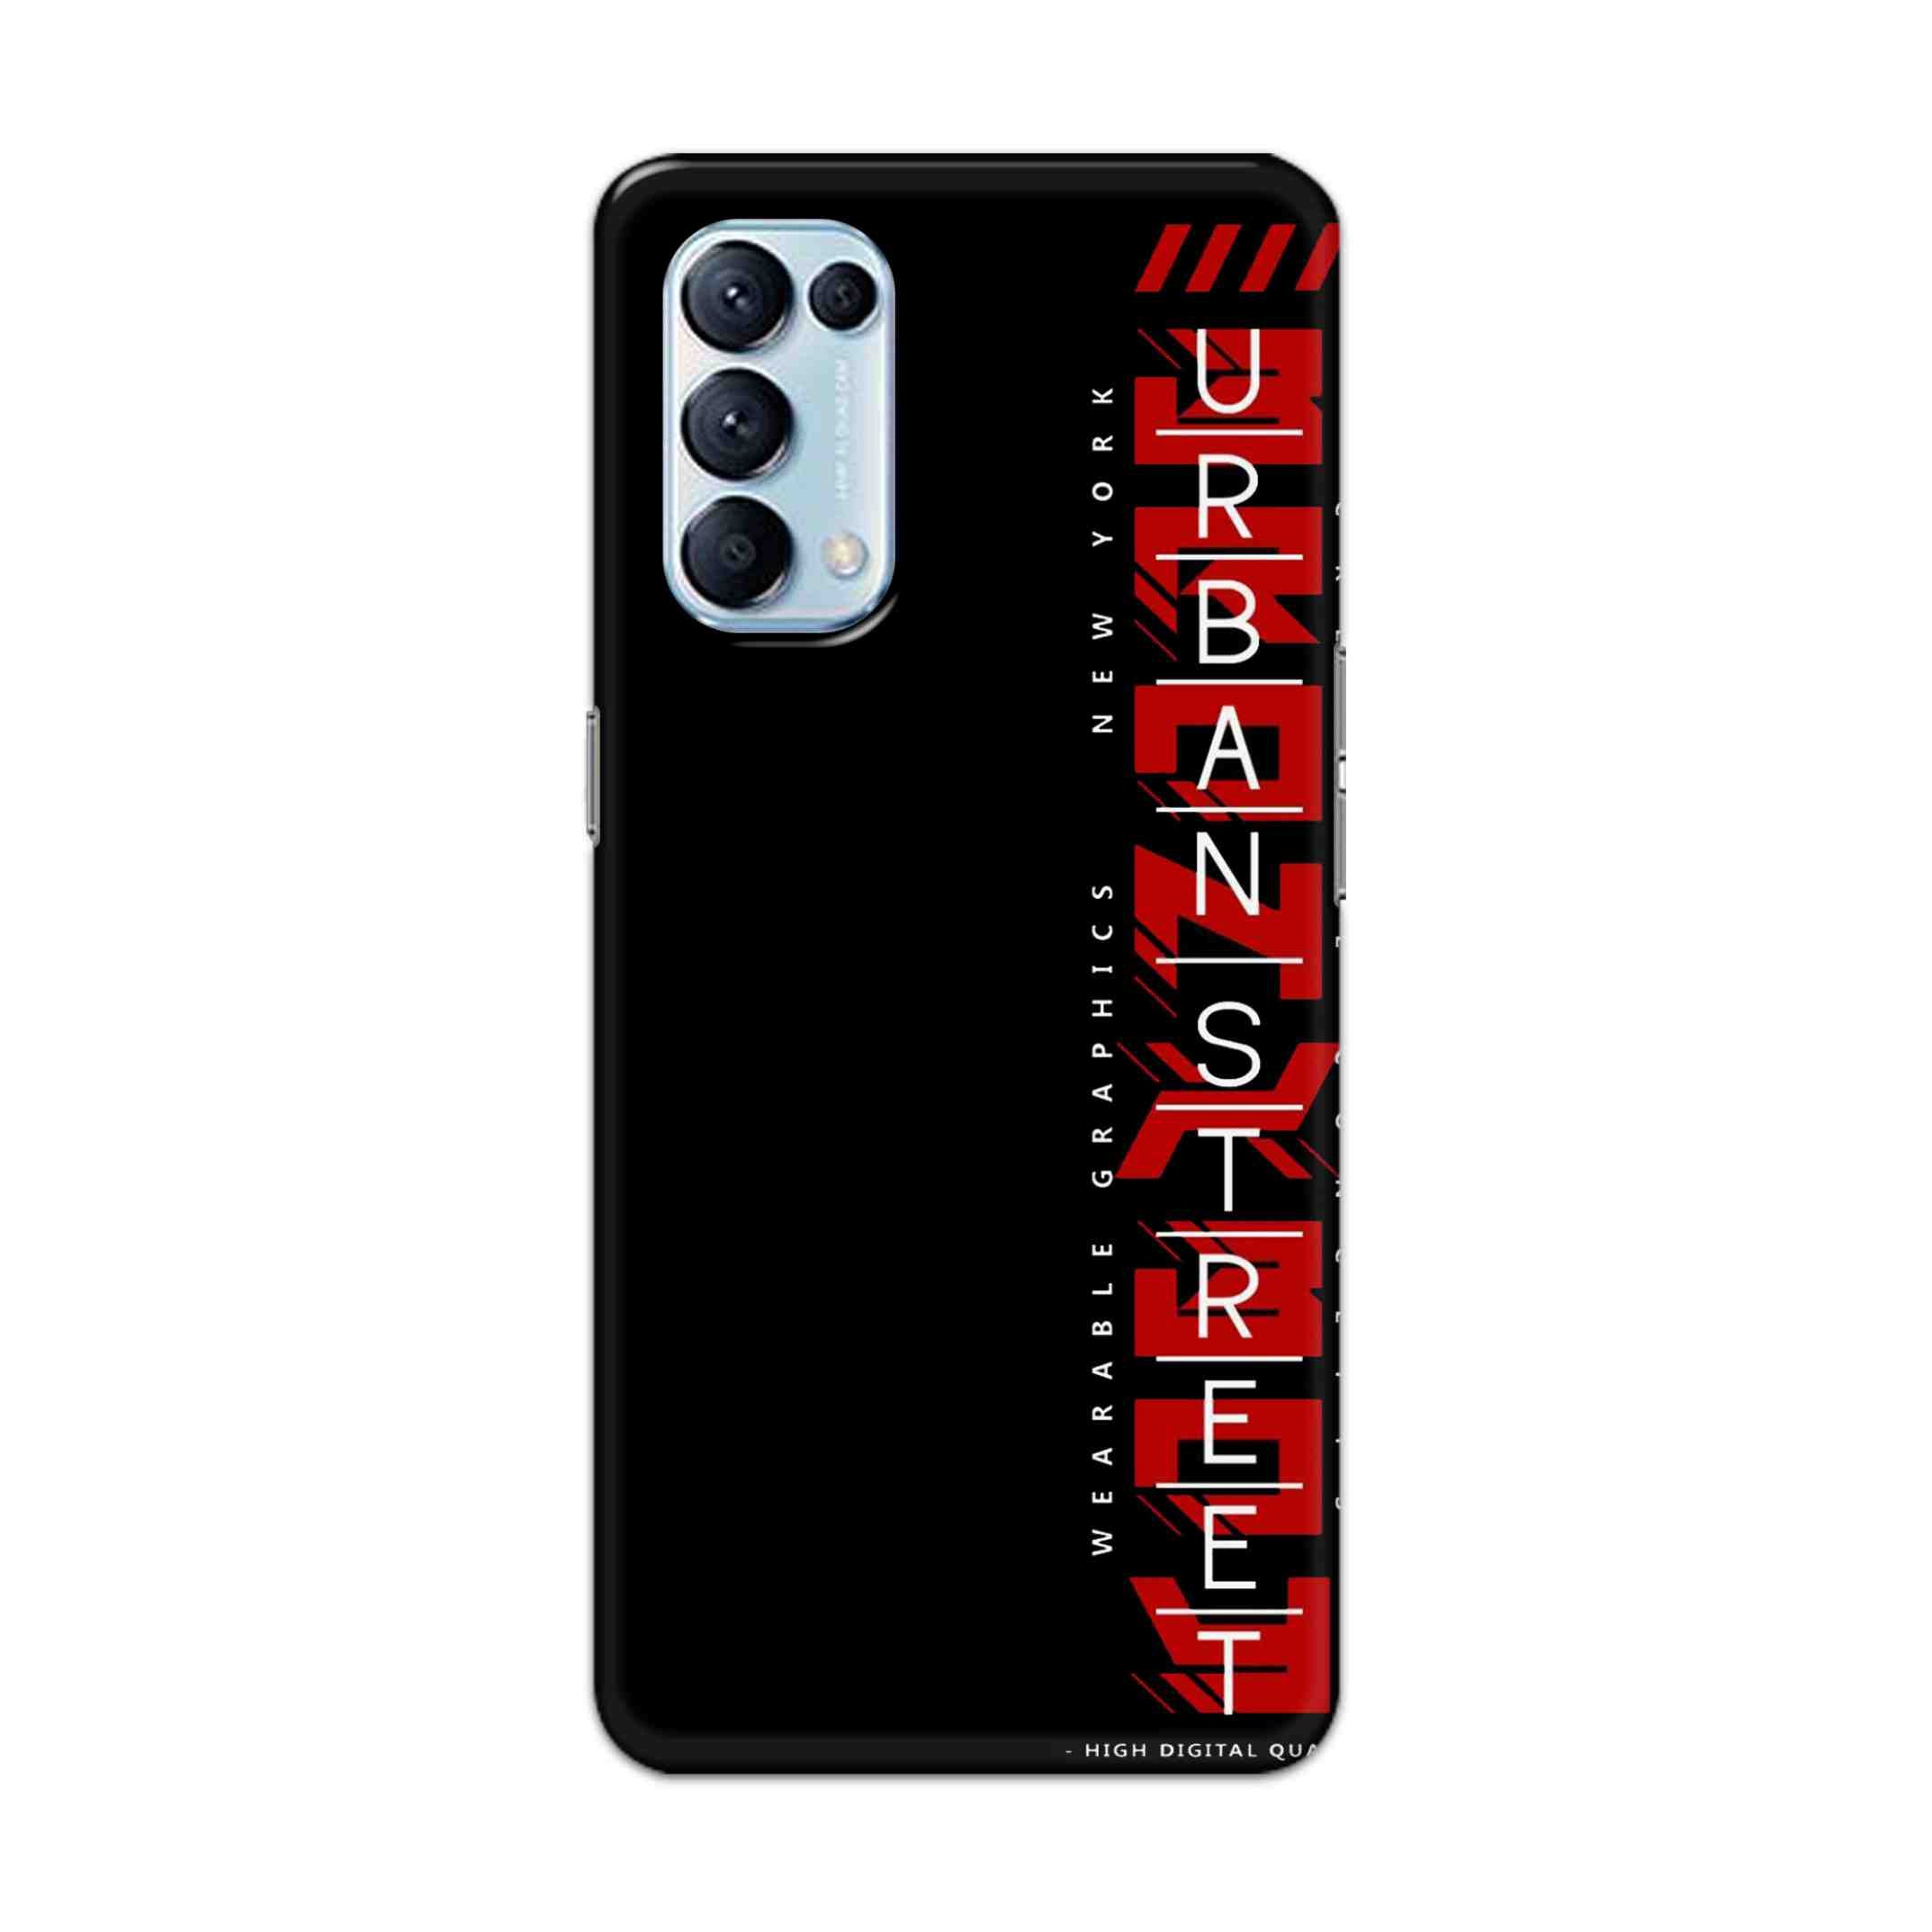 Buy Urban Street Hard Back Mobile Phone Case Cover For Oppo Reno 5 Pro 5G Online